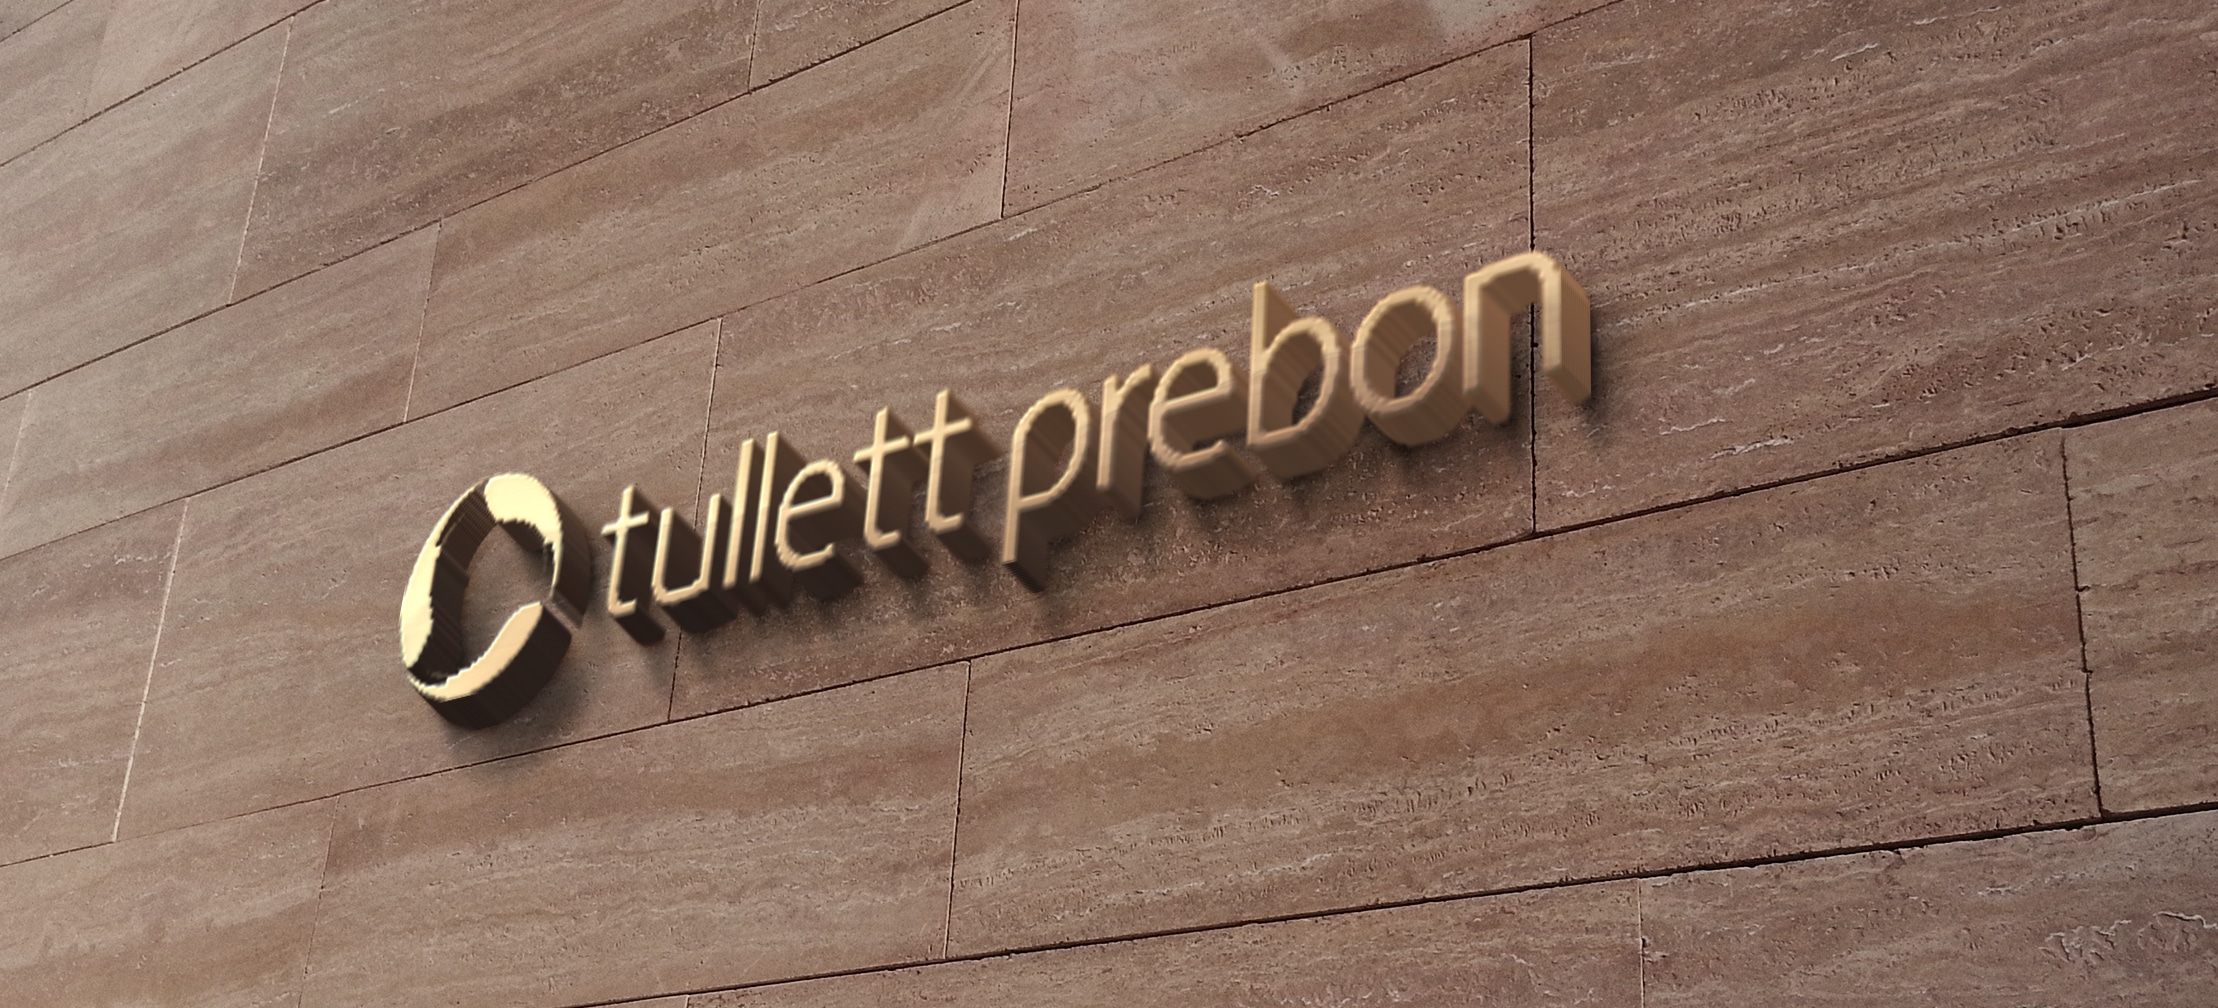 Tullett Prebon adds Andrew Baddeley as CFO, Paul Mainwaring Steps Down